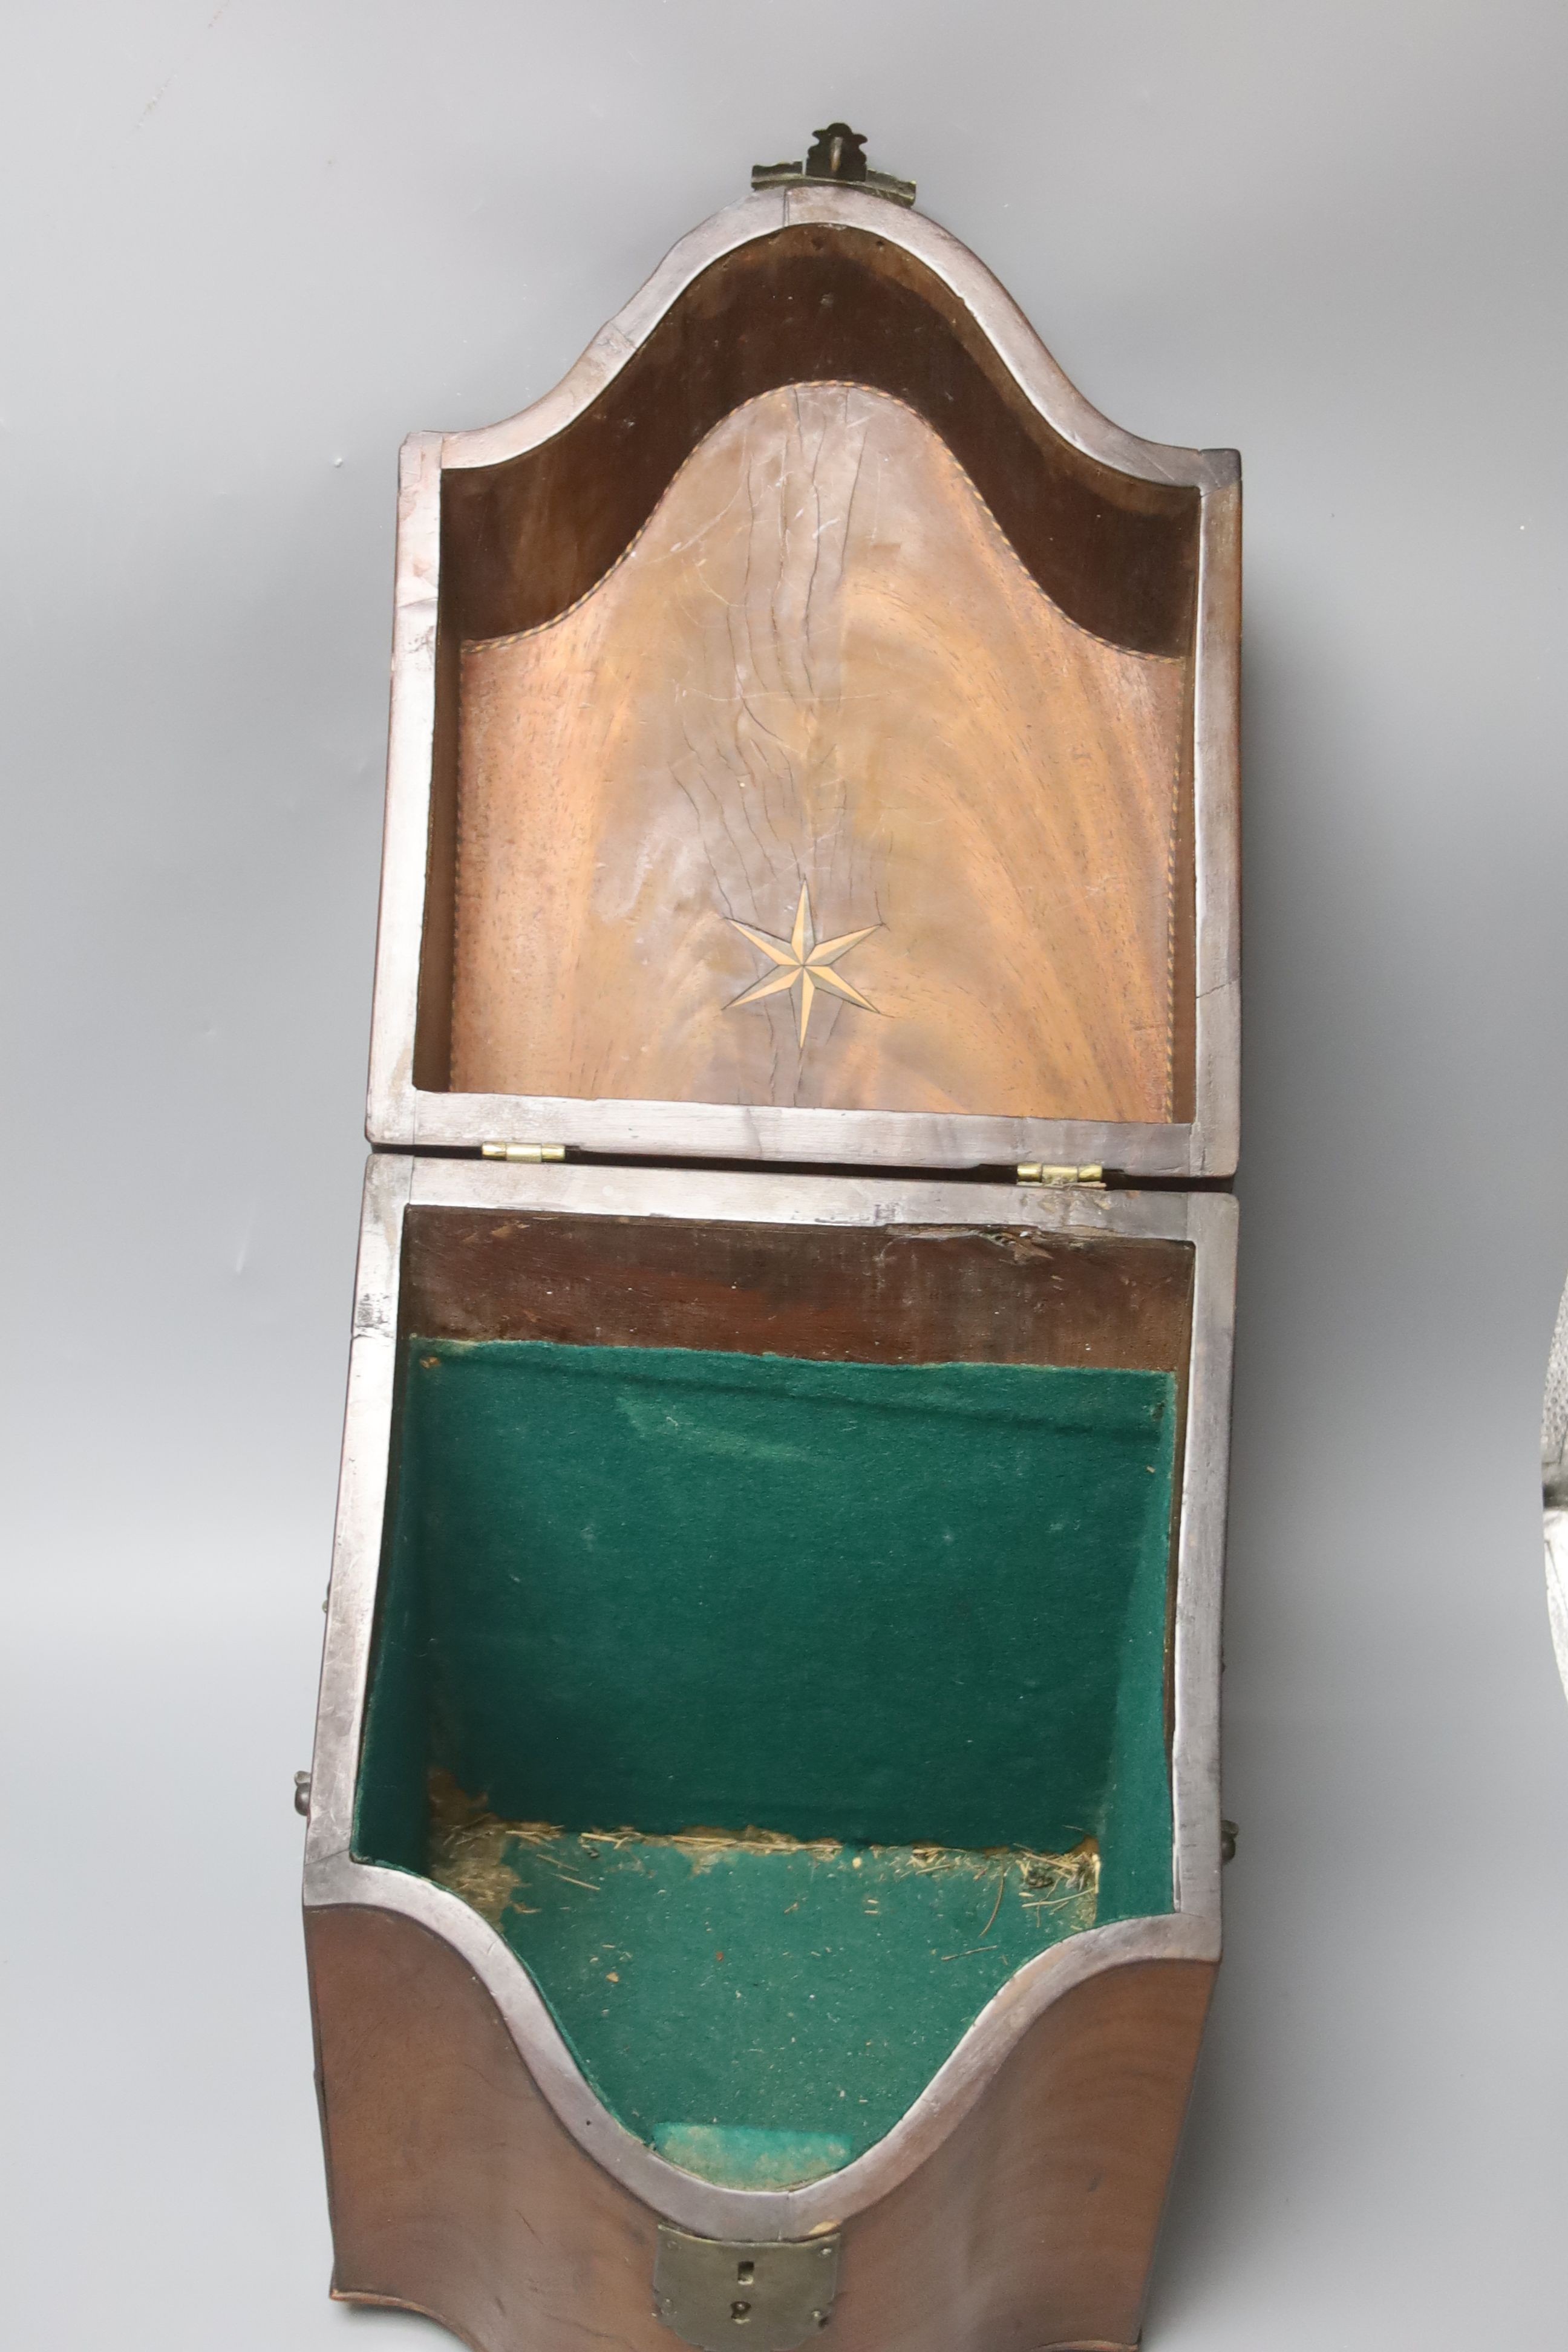 A George II mahogany knife box together with a George III mahogany tea caddy (2) 38cm